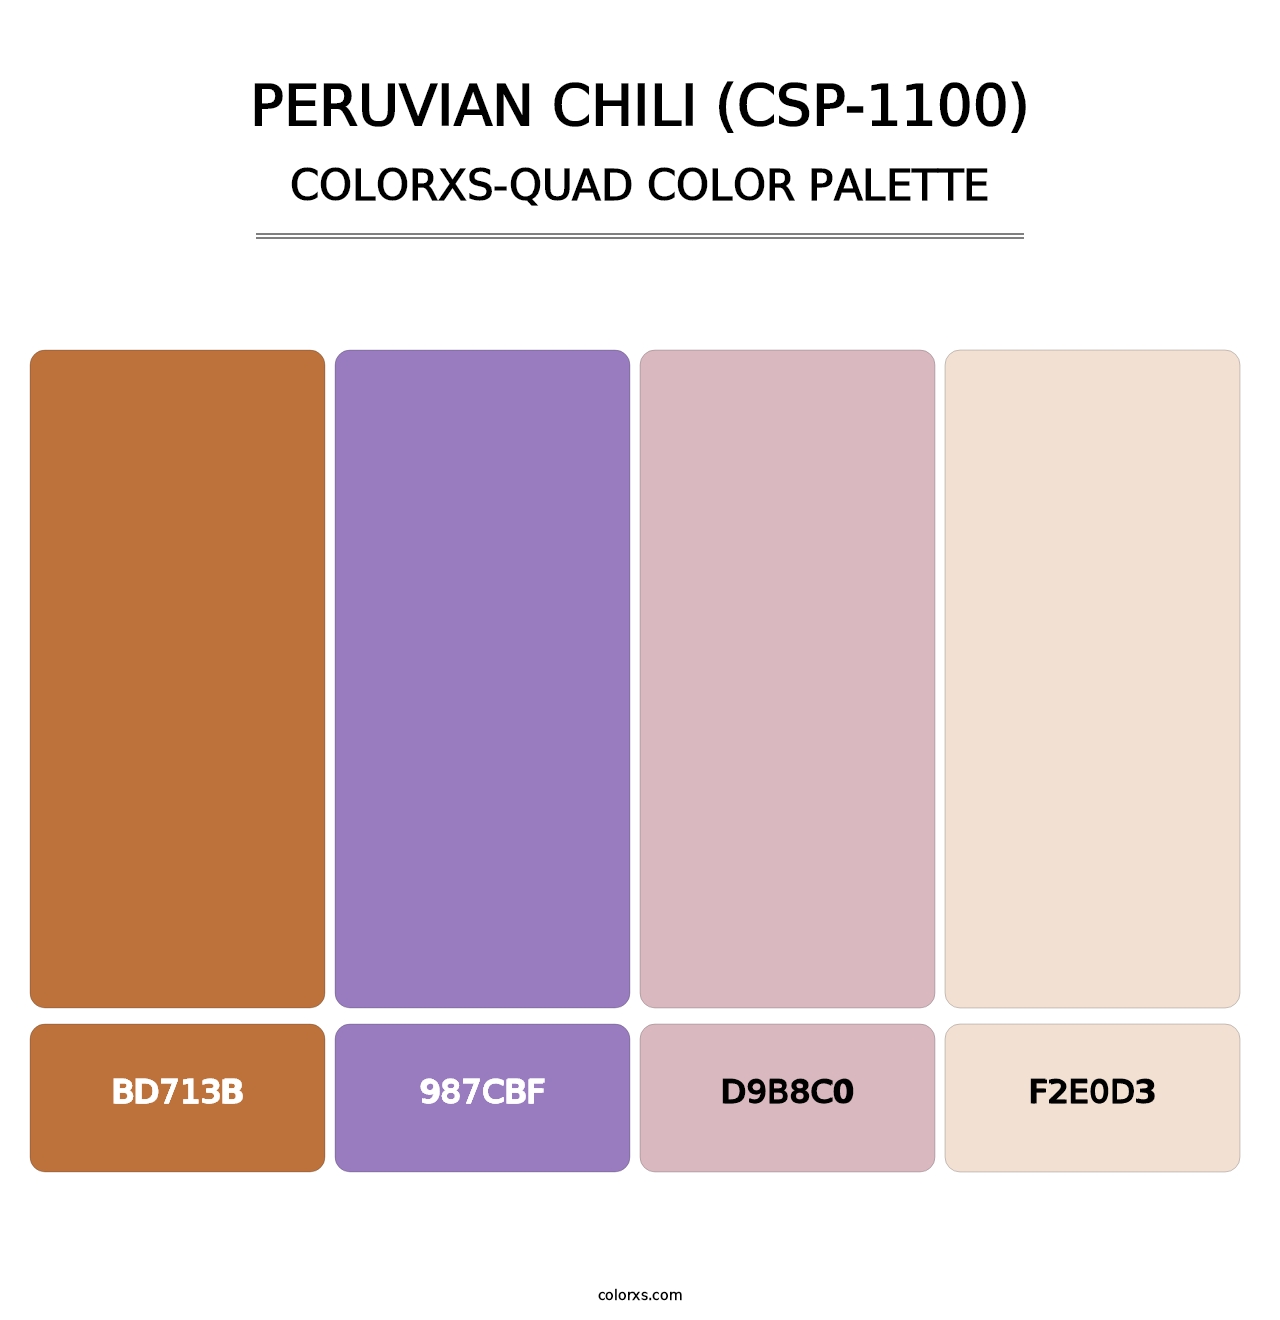 Peruvian Chili (CSP-1100) - Colorxs Quad Palette